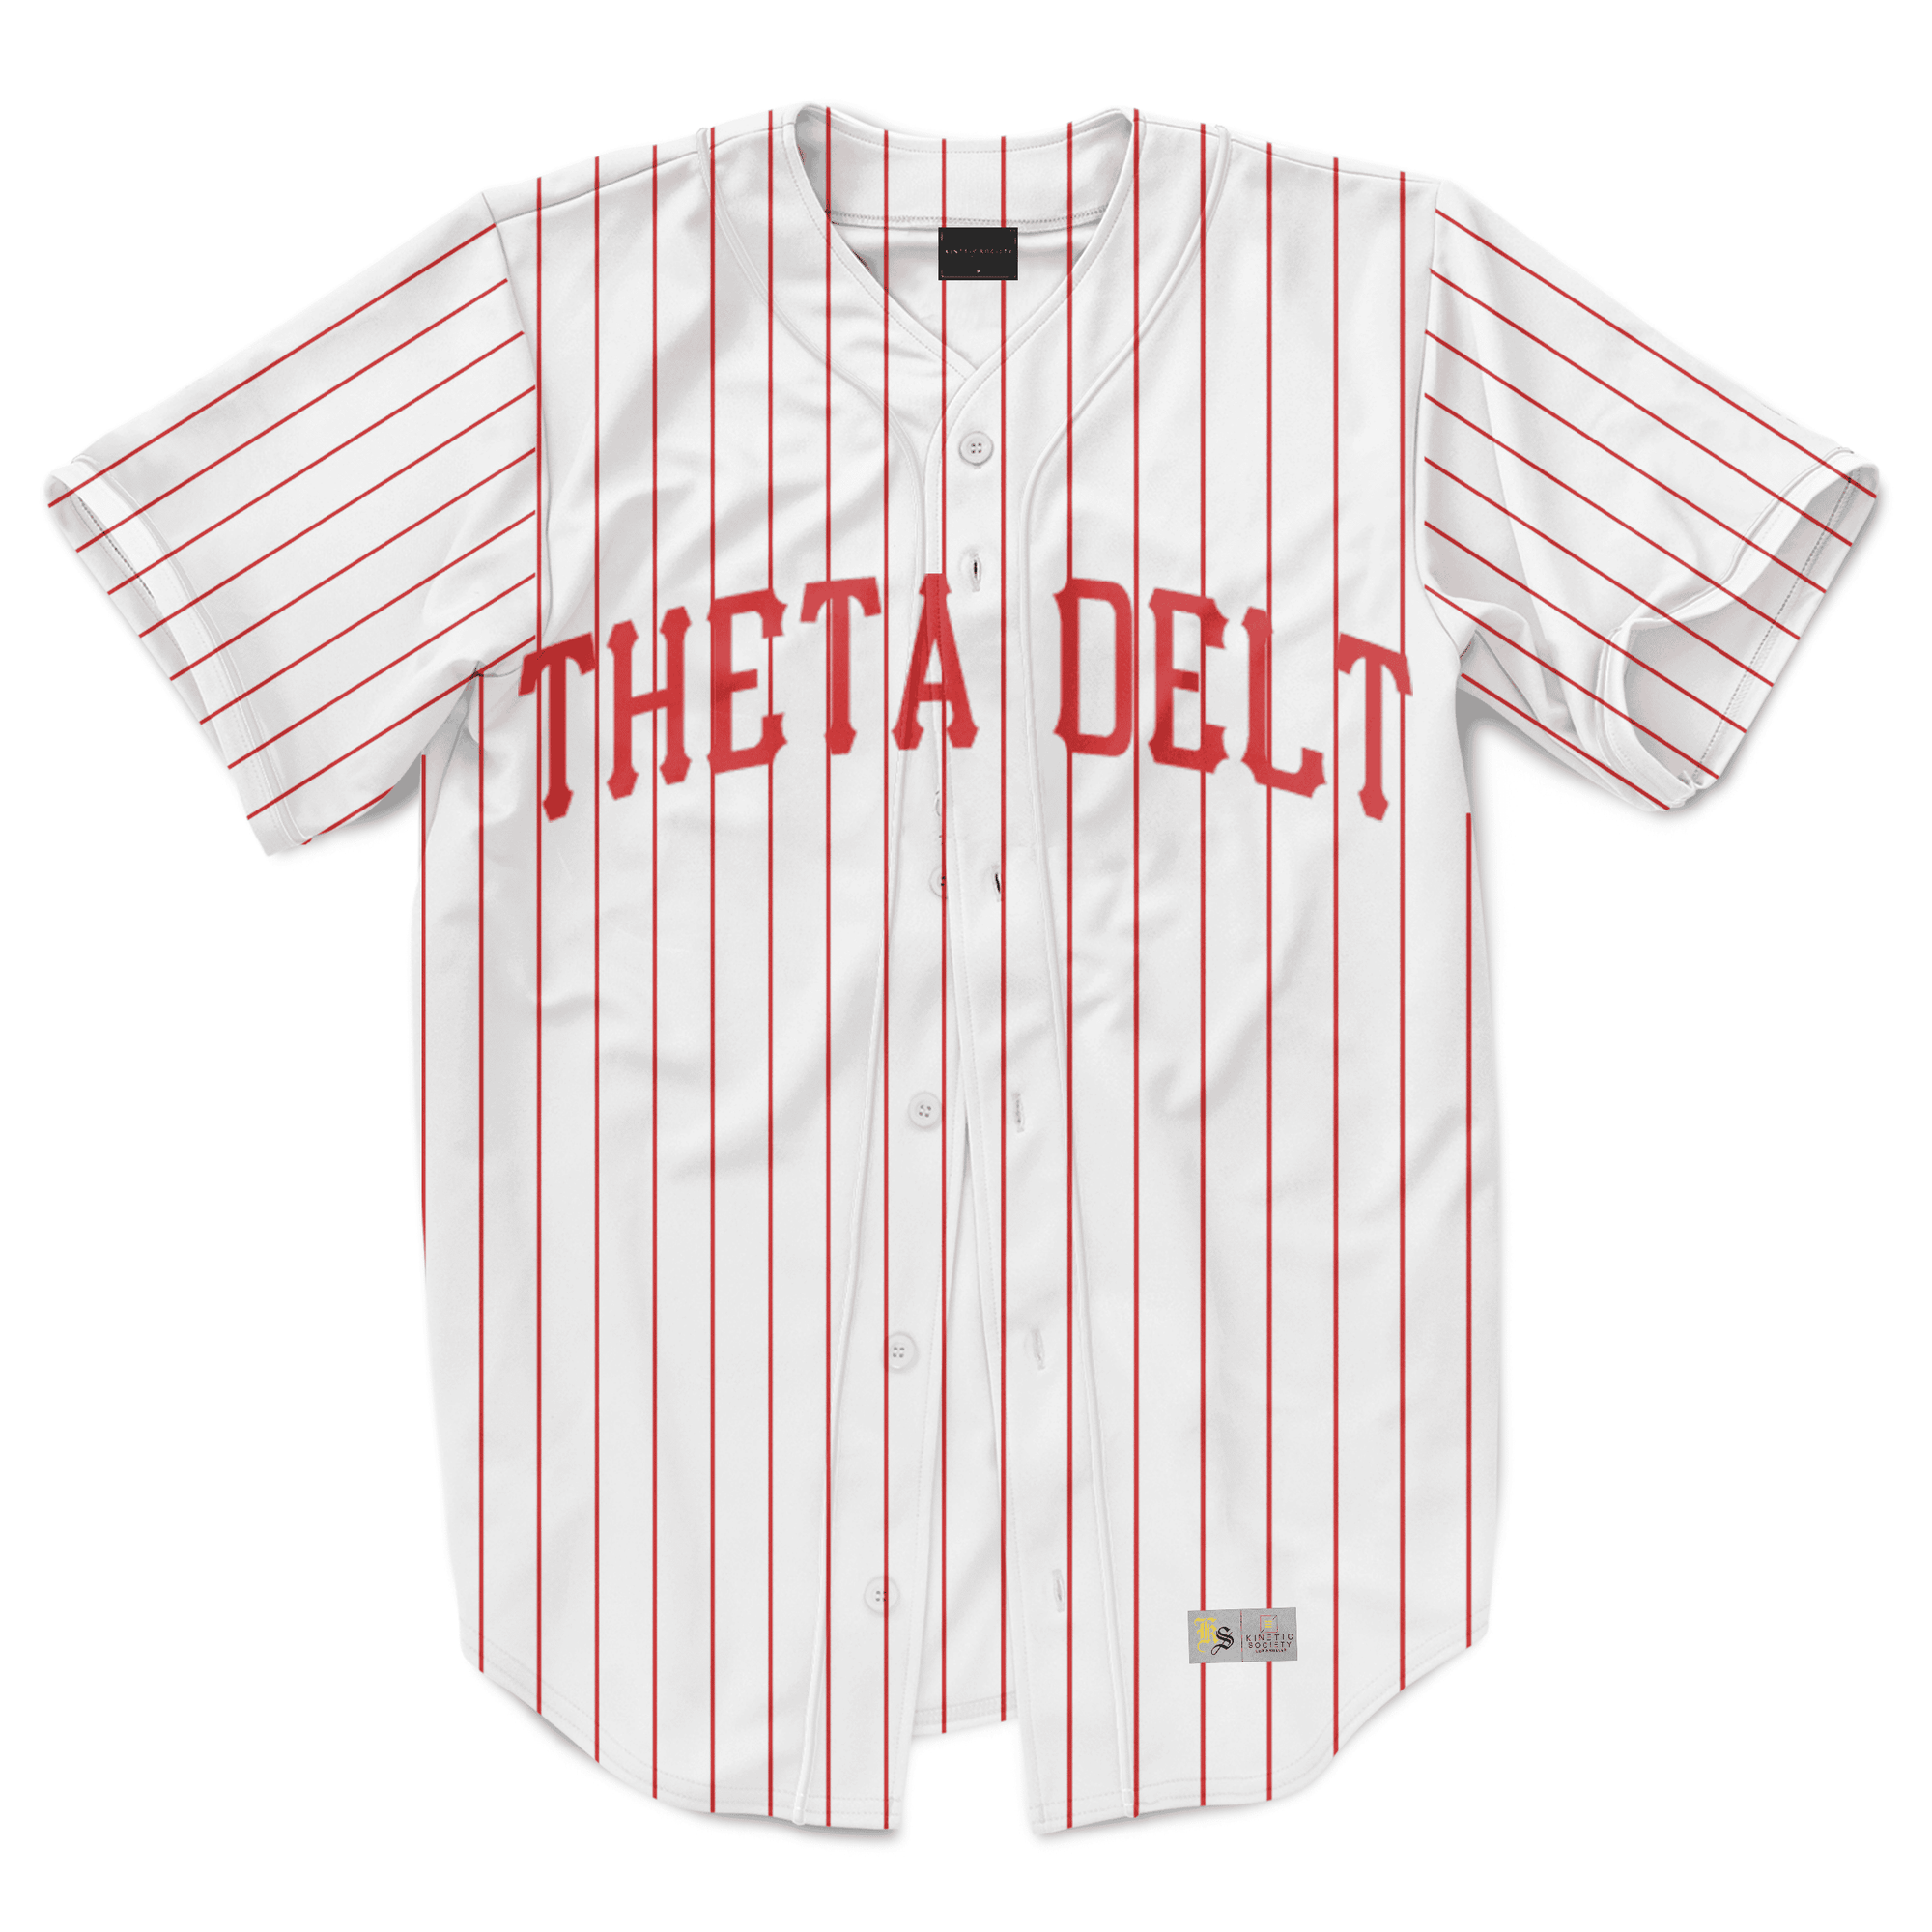 Theta Delta Chi - Red Pinstripe Baseball Jersey